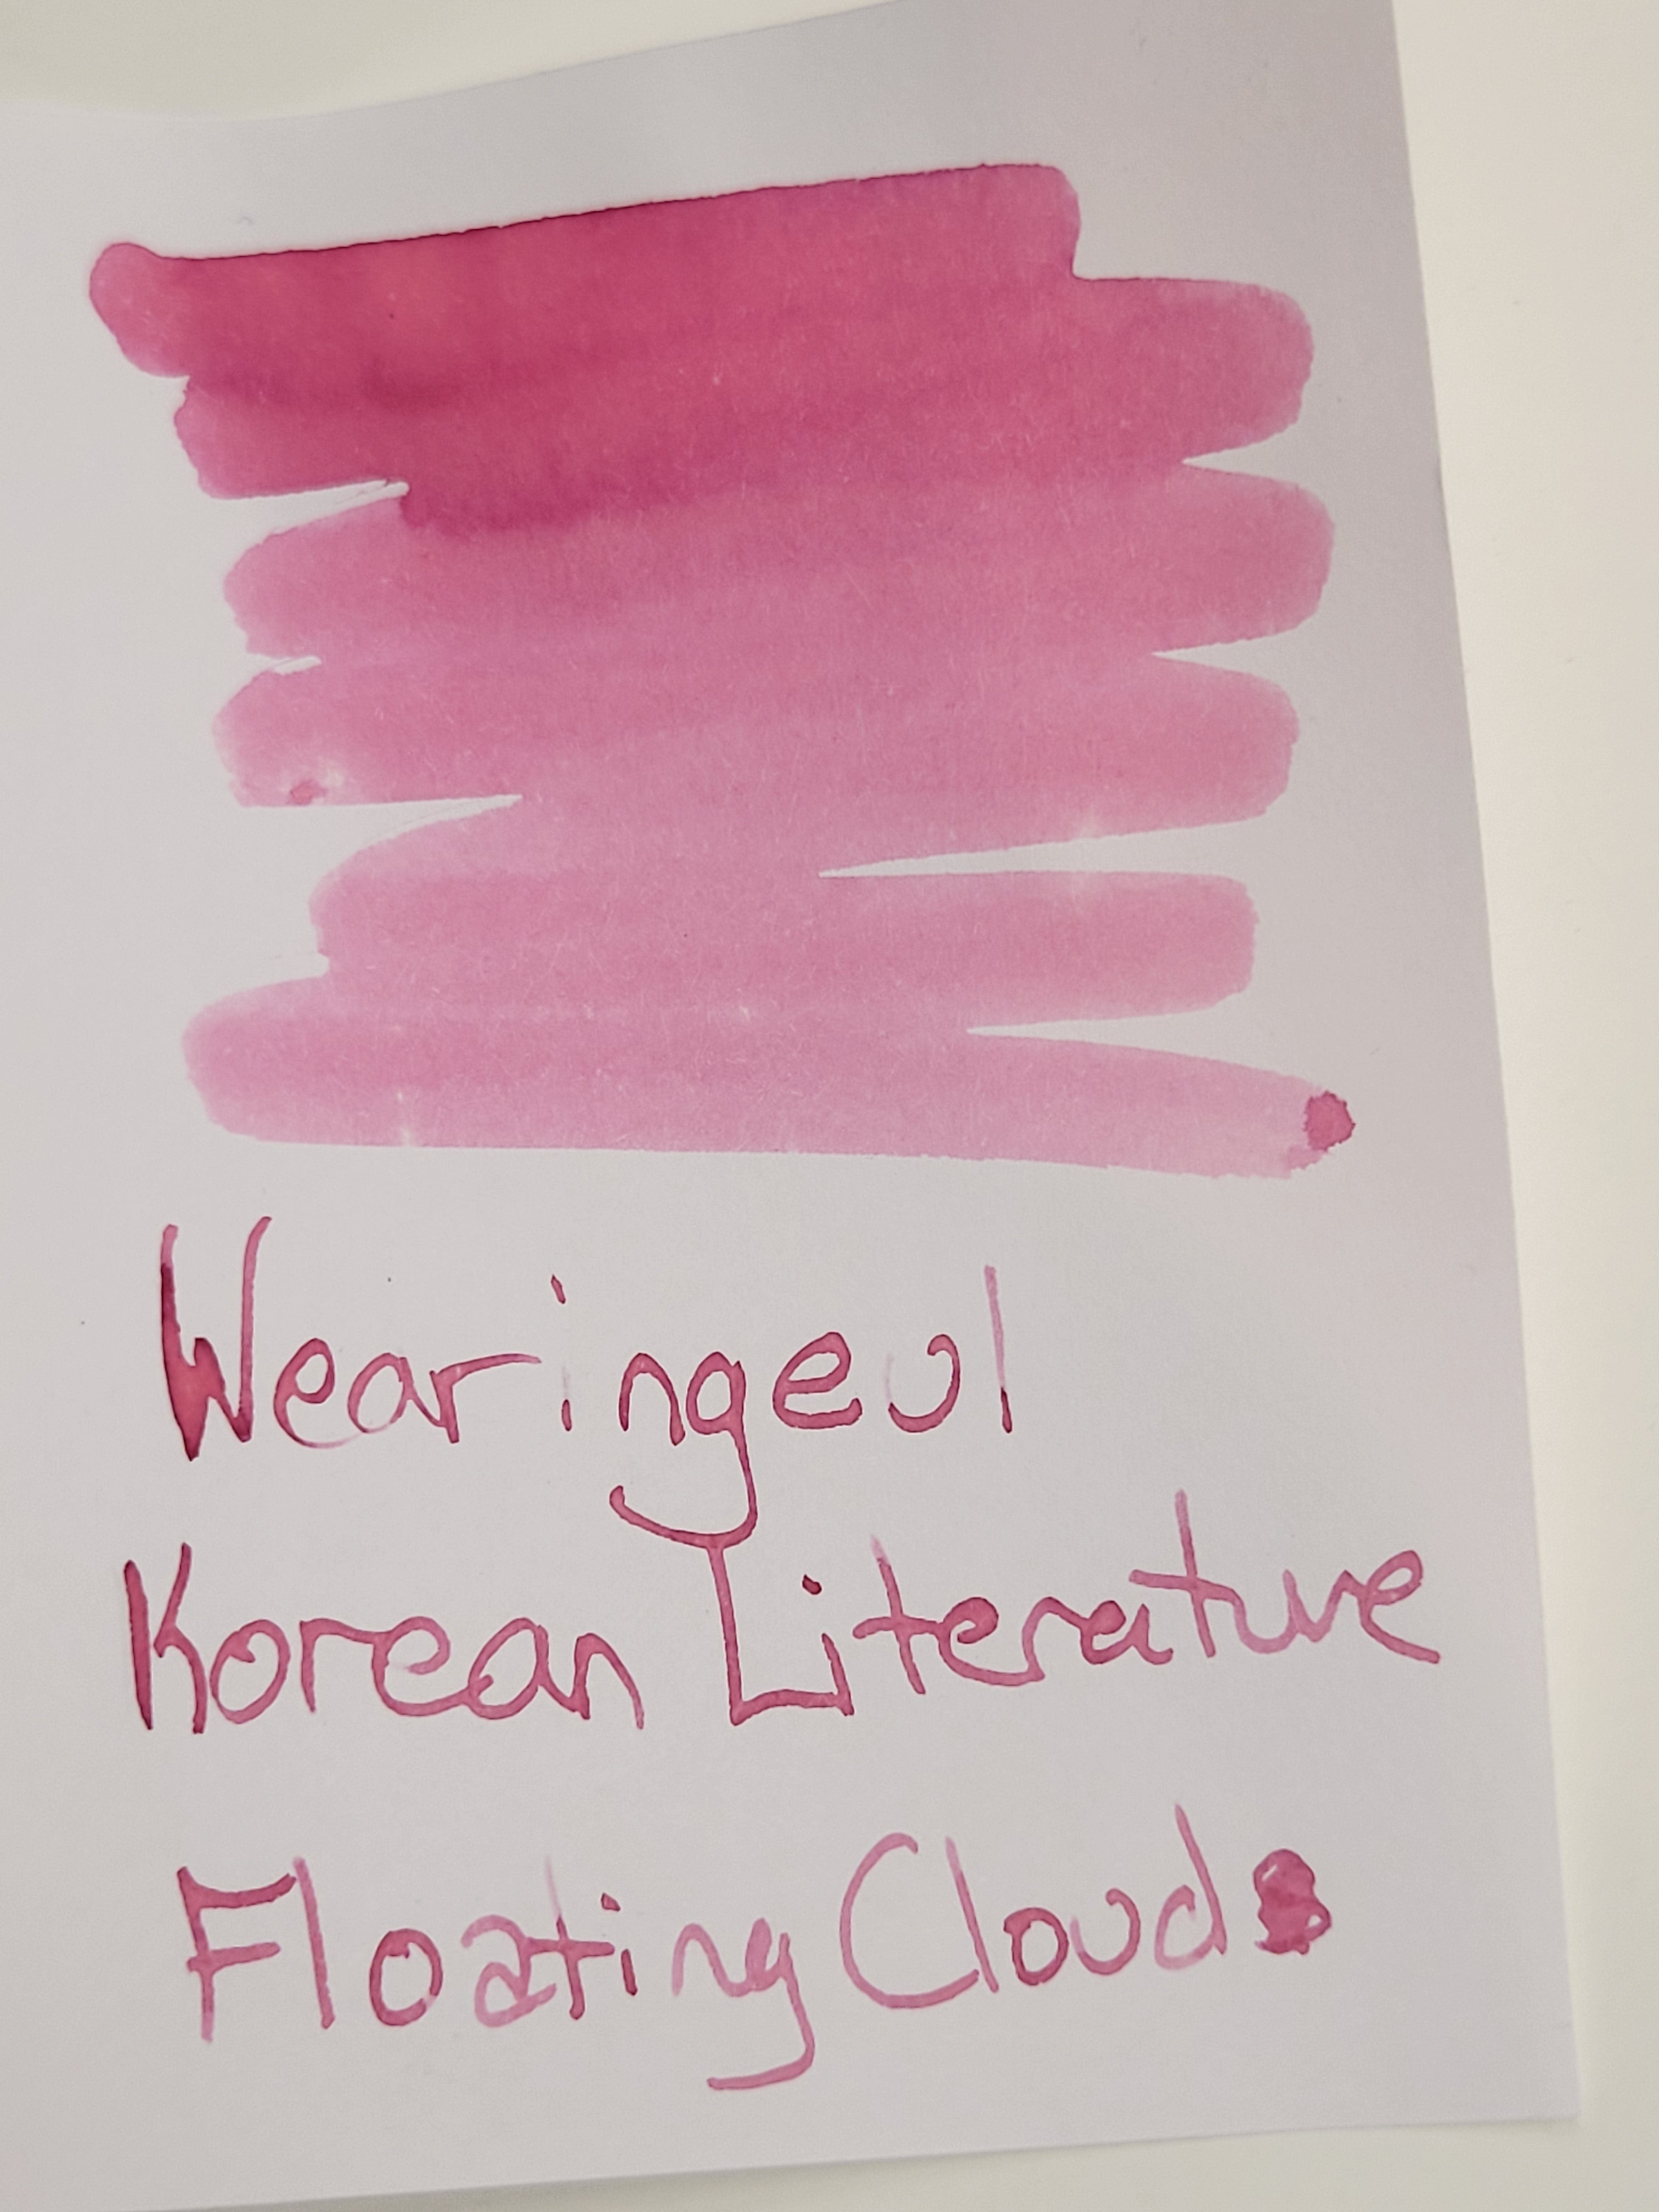 Wearingeul Korean Literature Ink Bottle - Floating Cloud (30 ml) Wearingeul